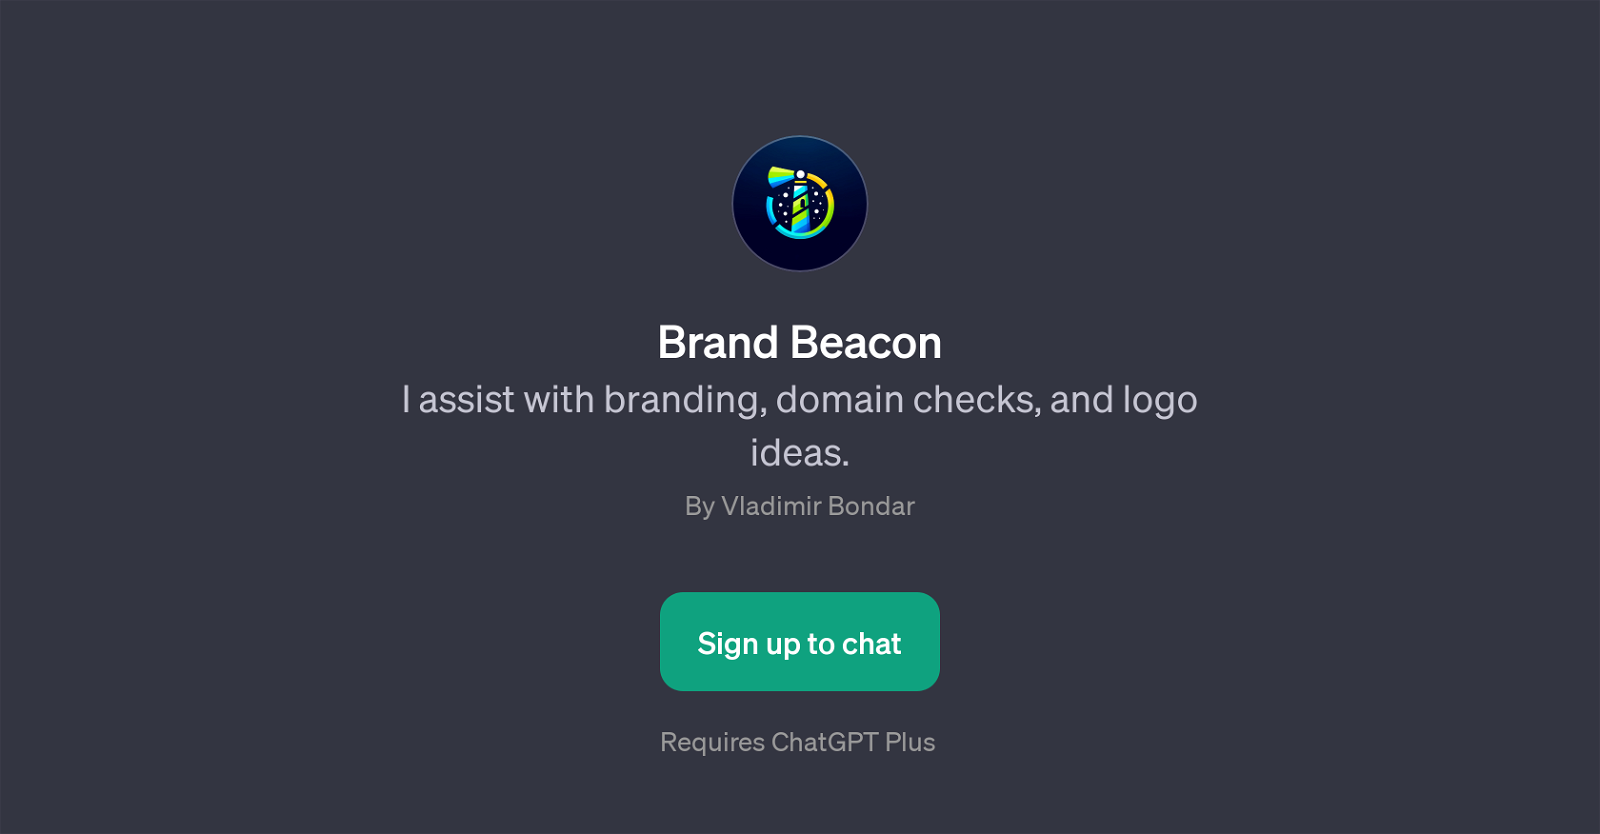 Brand Beacon website